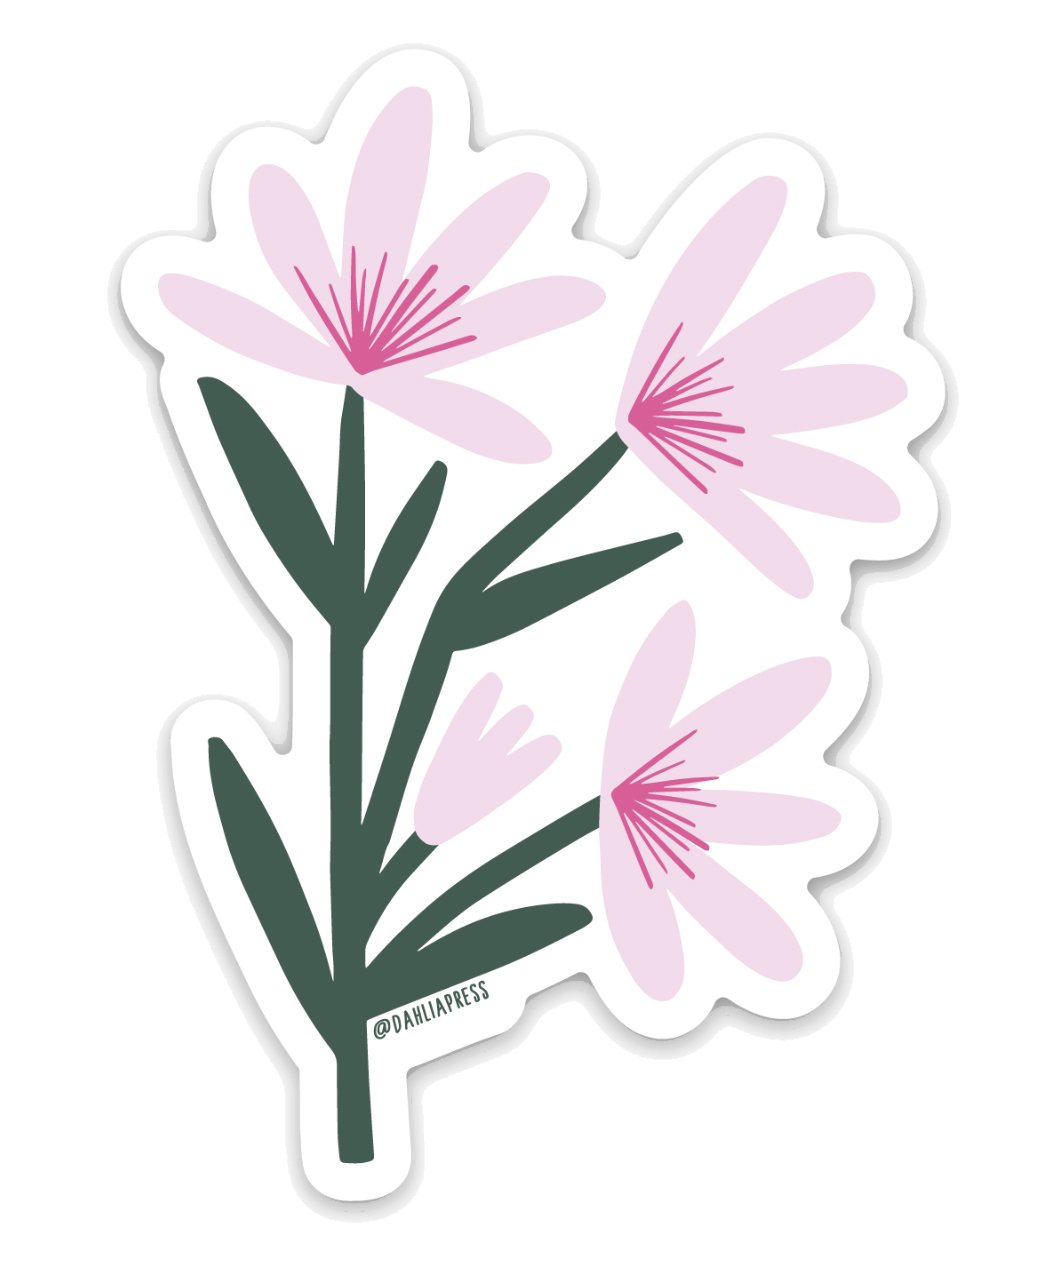 Flower Decoration 58 Wall Sticker - TenStickers